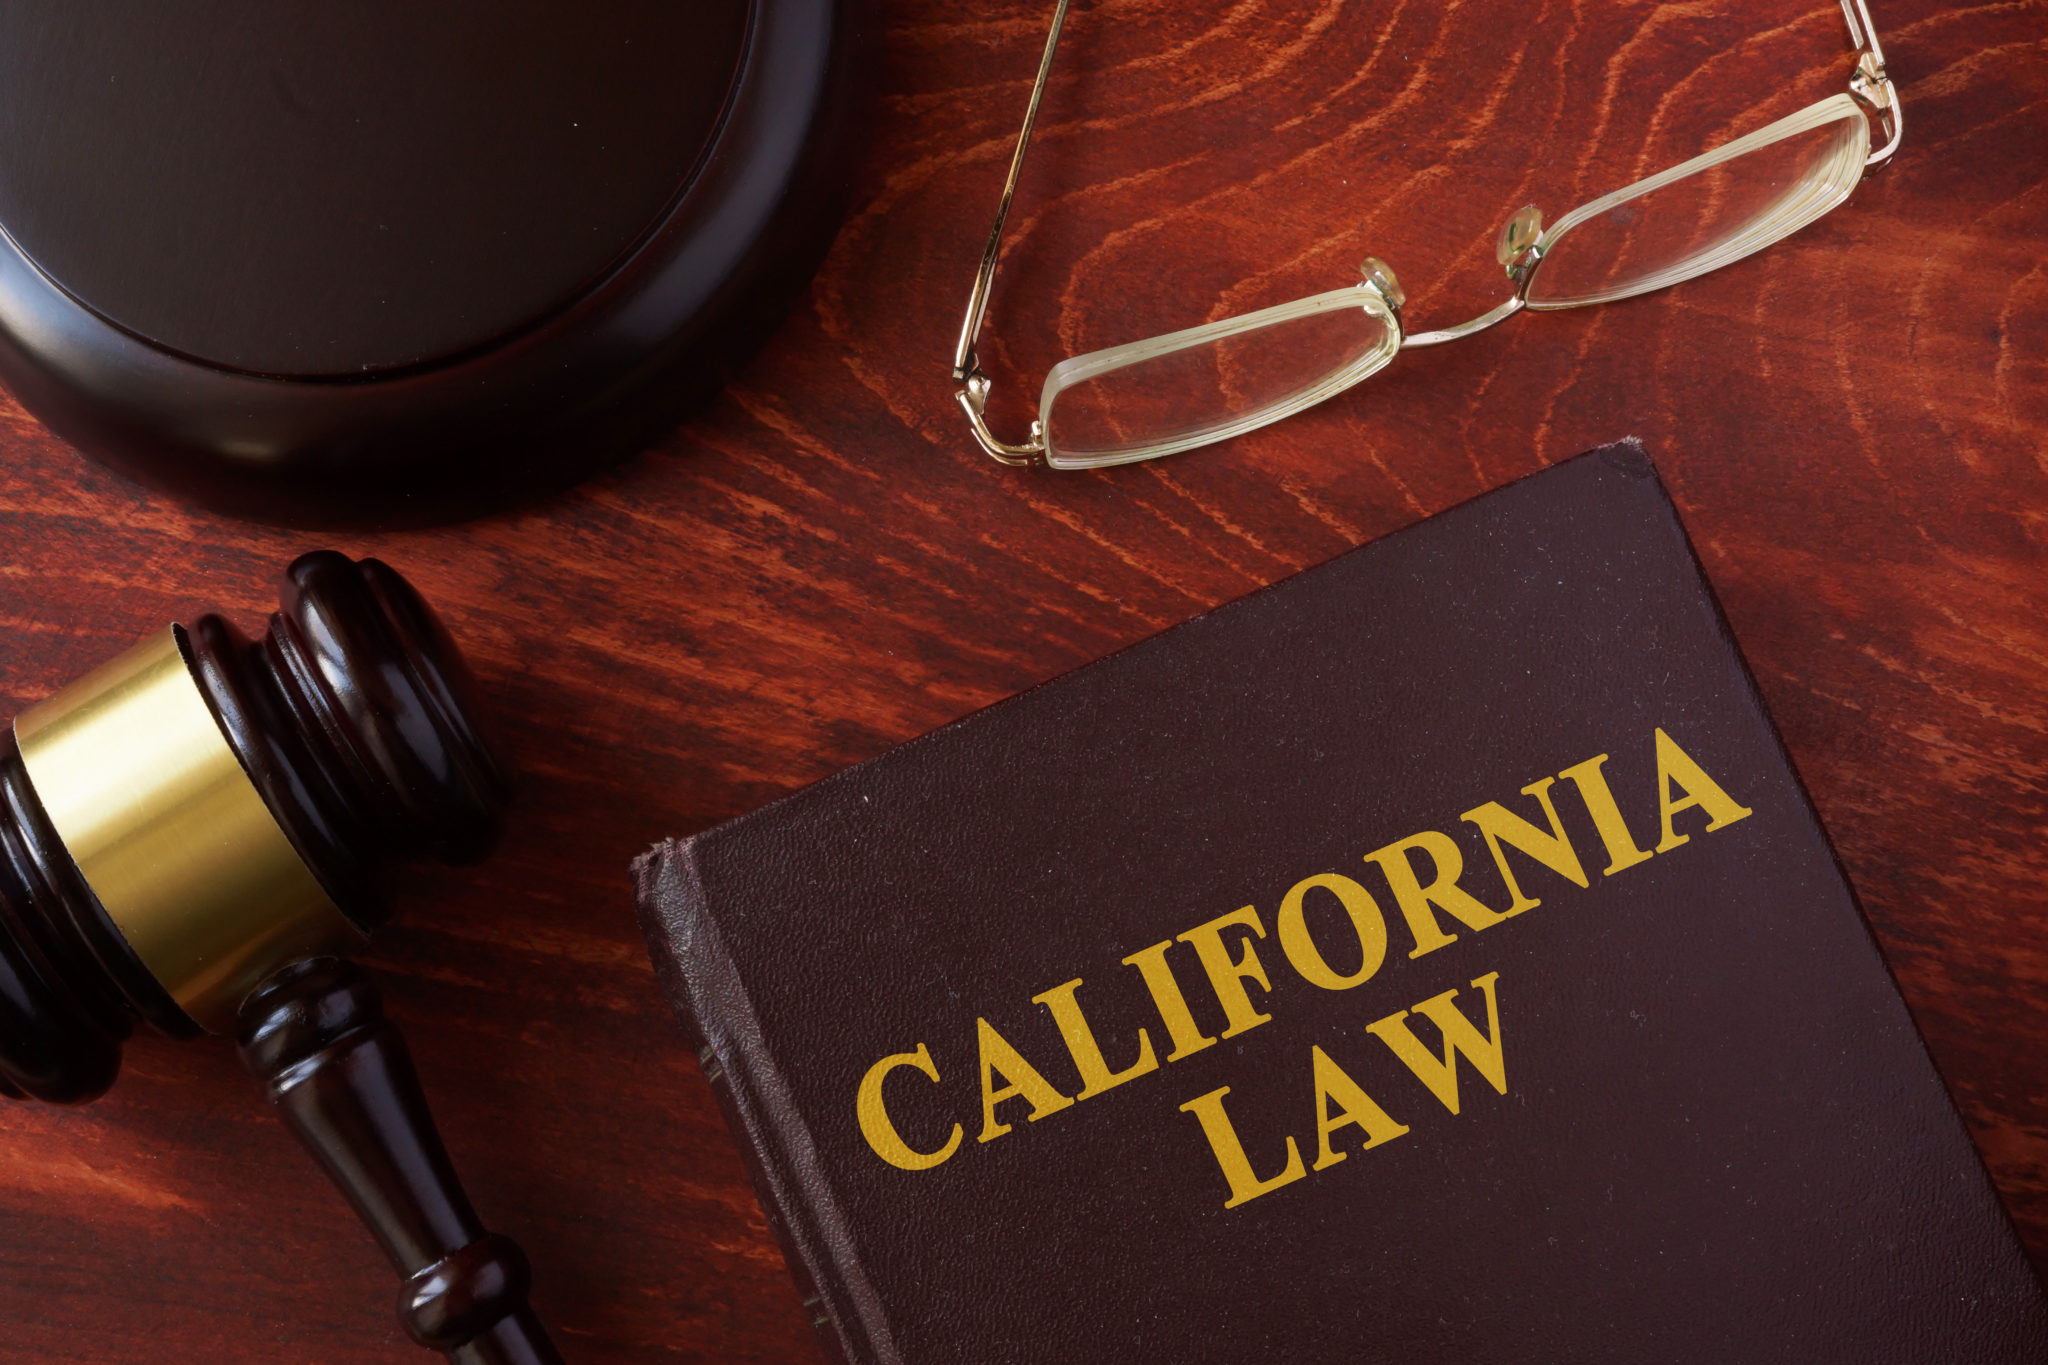 Право актив. Economy Law. State Law. Калифорния право. Книга с законами называется-.